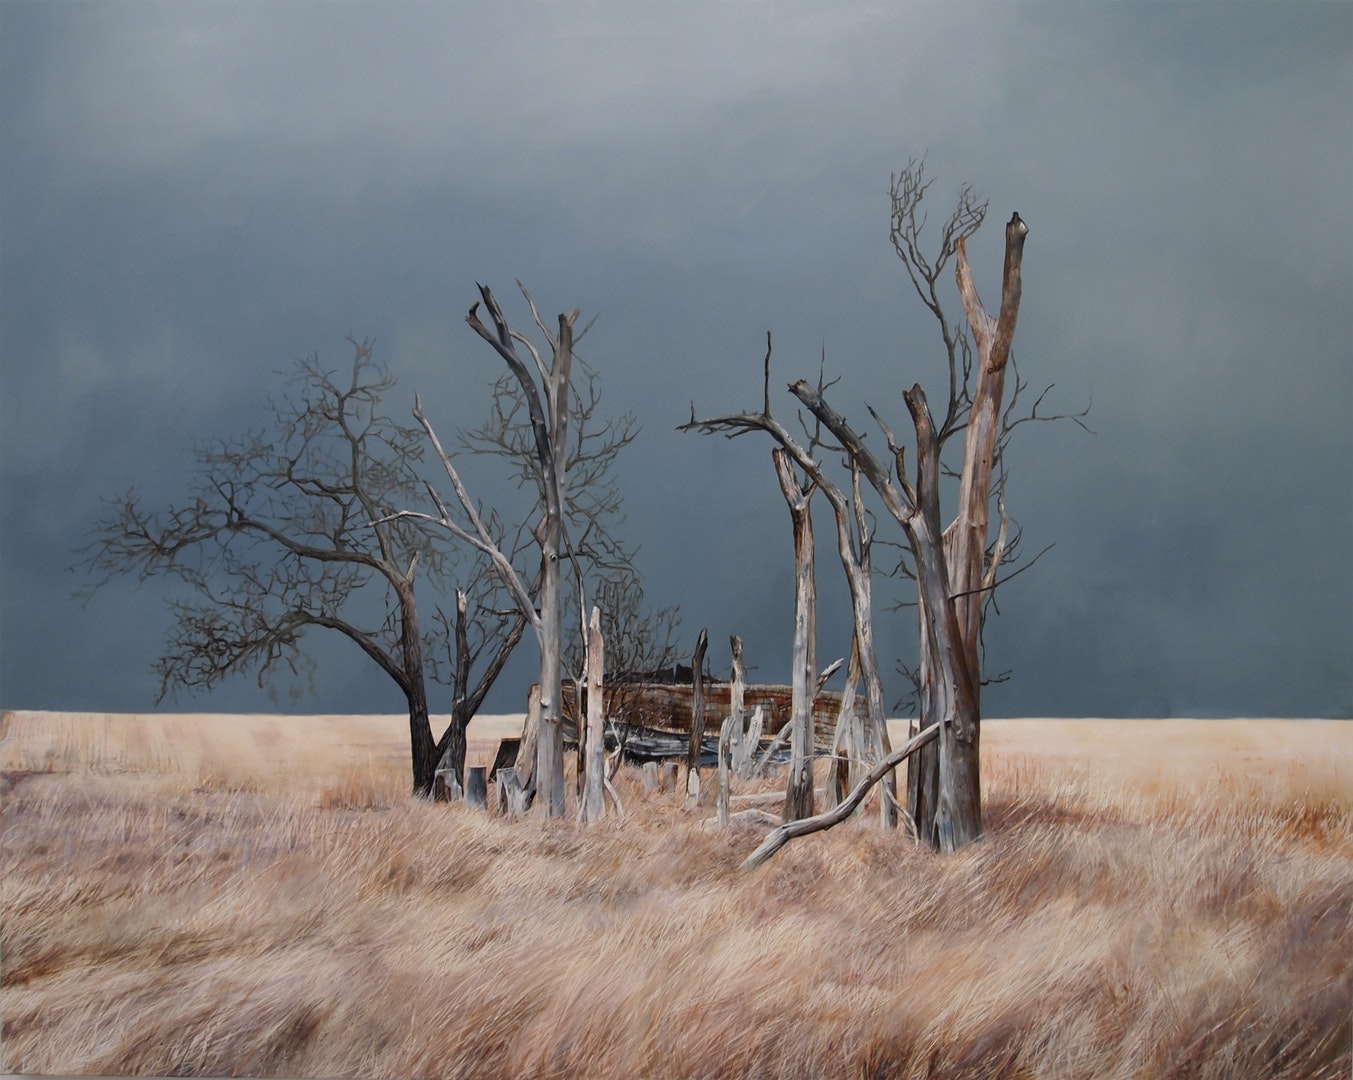 'Drifter', Polly Townsend, Oil and acrylic on canvas, 121 x 152 cm